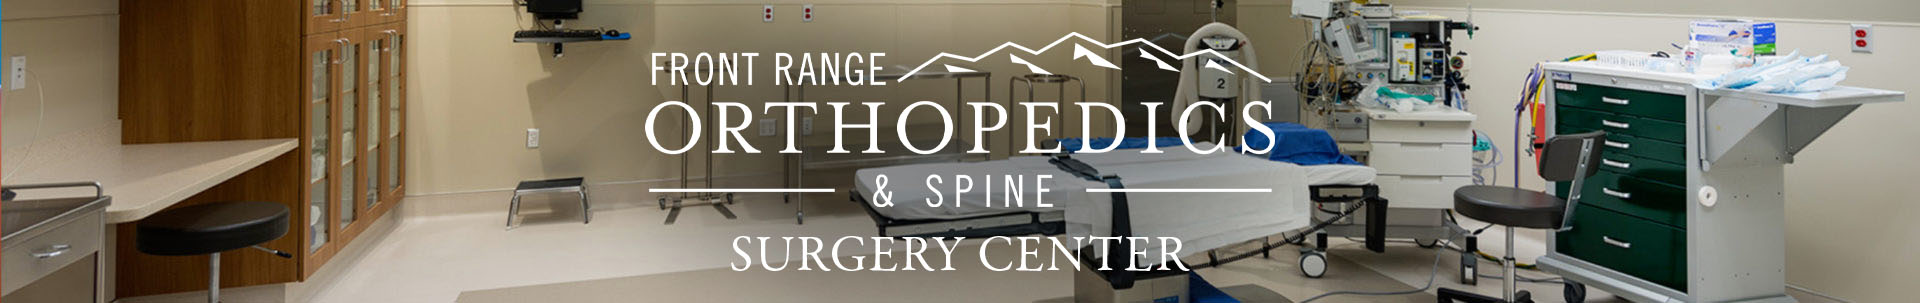 Front Range Orthopedic Surgery Center - Clinic